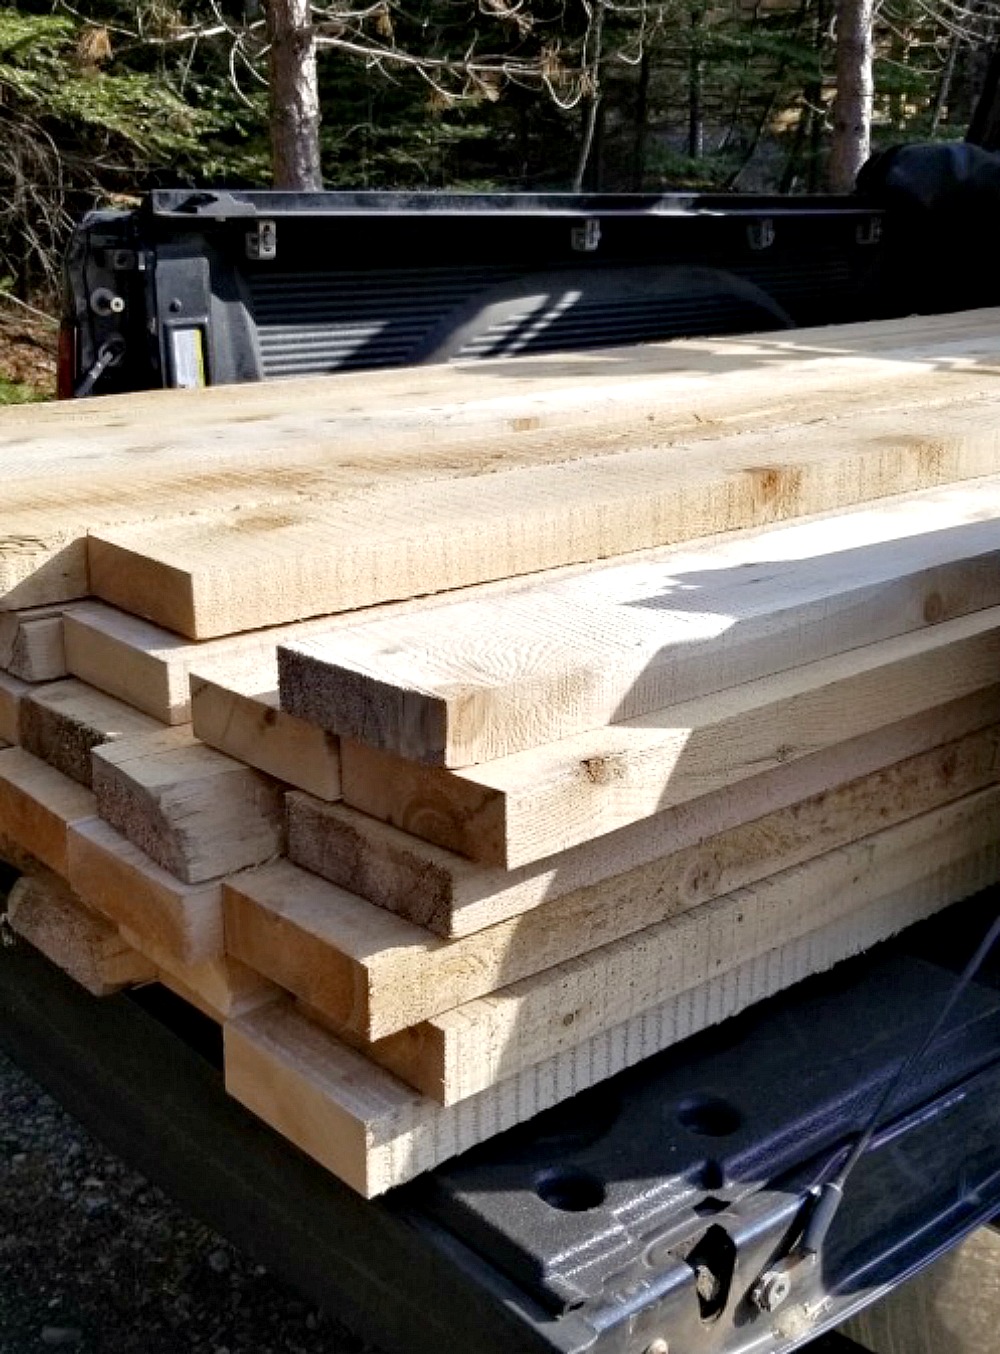 Rough Hewn Lumber for Garden Beds